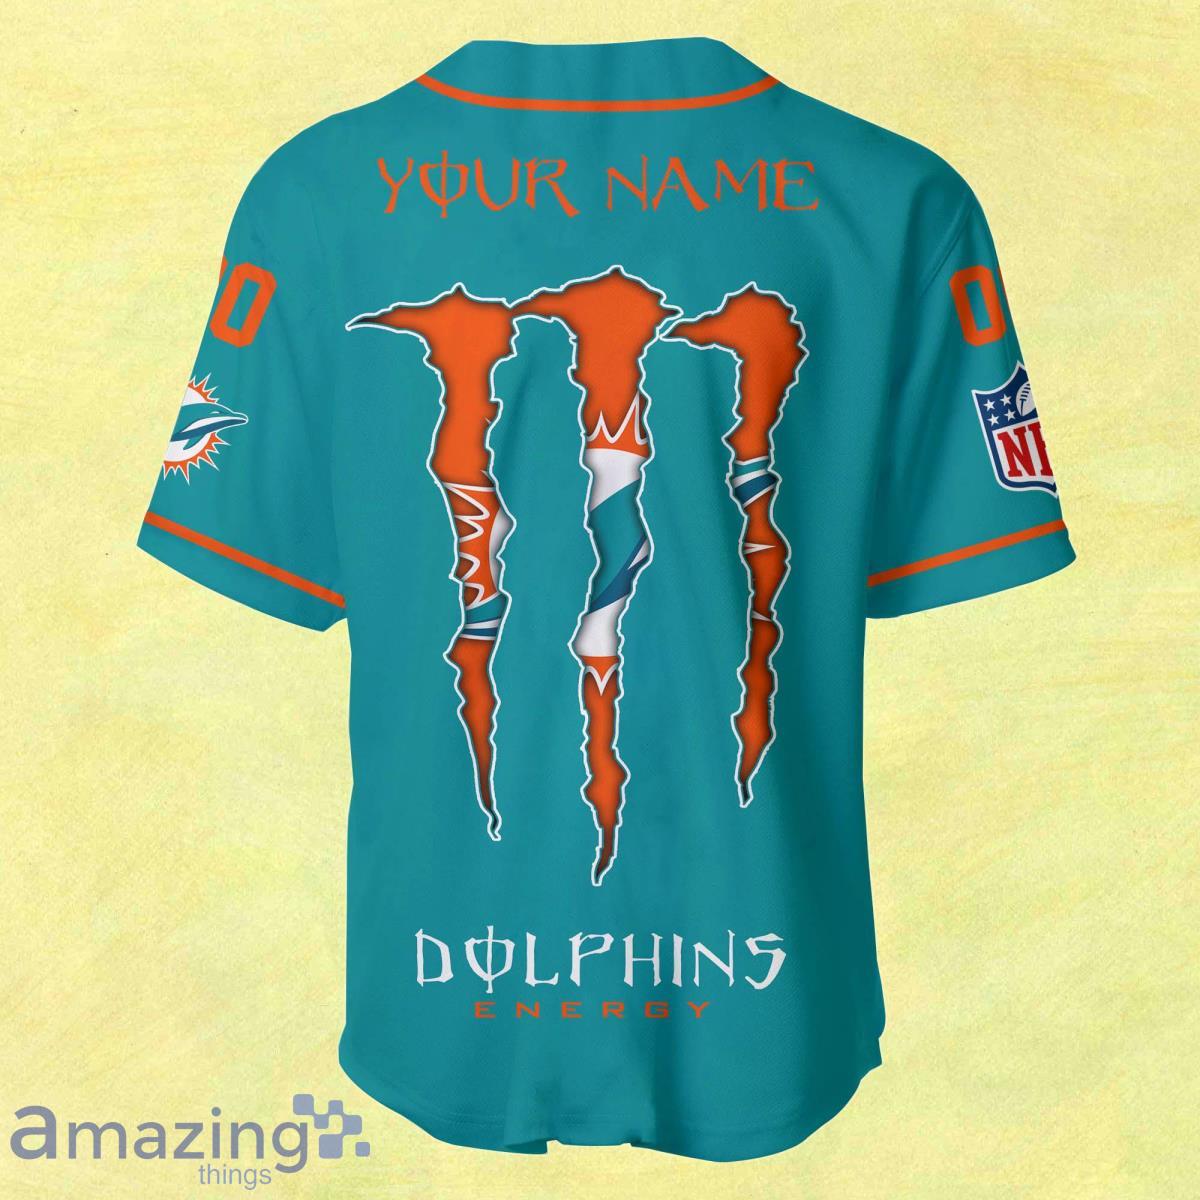 HOTEST] Miami Dolphins Baseball Jersey Shirt